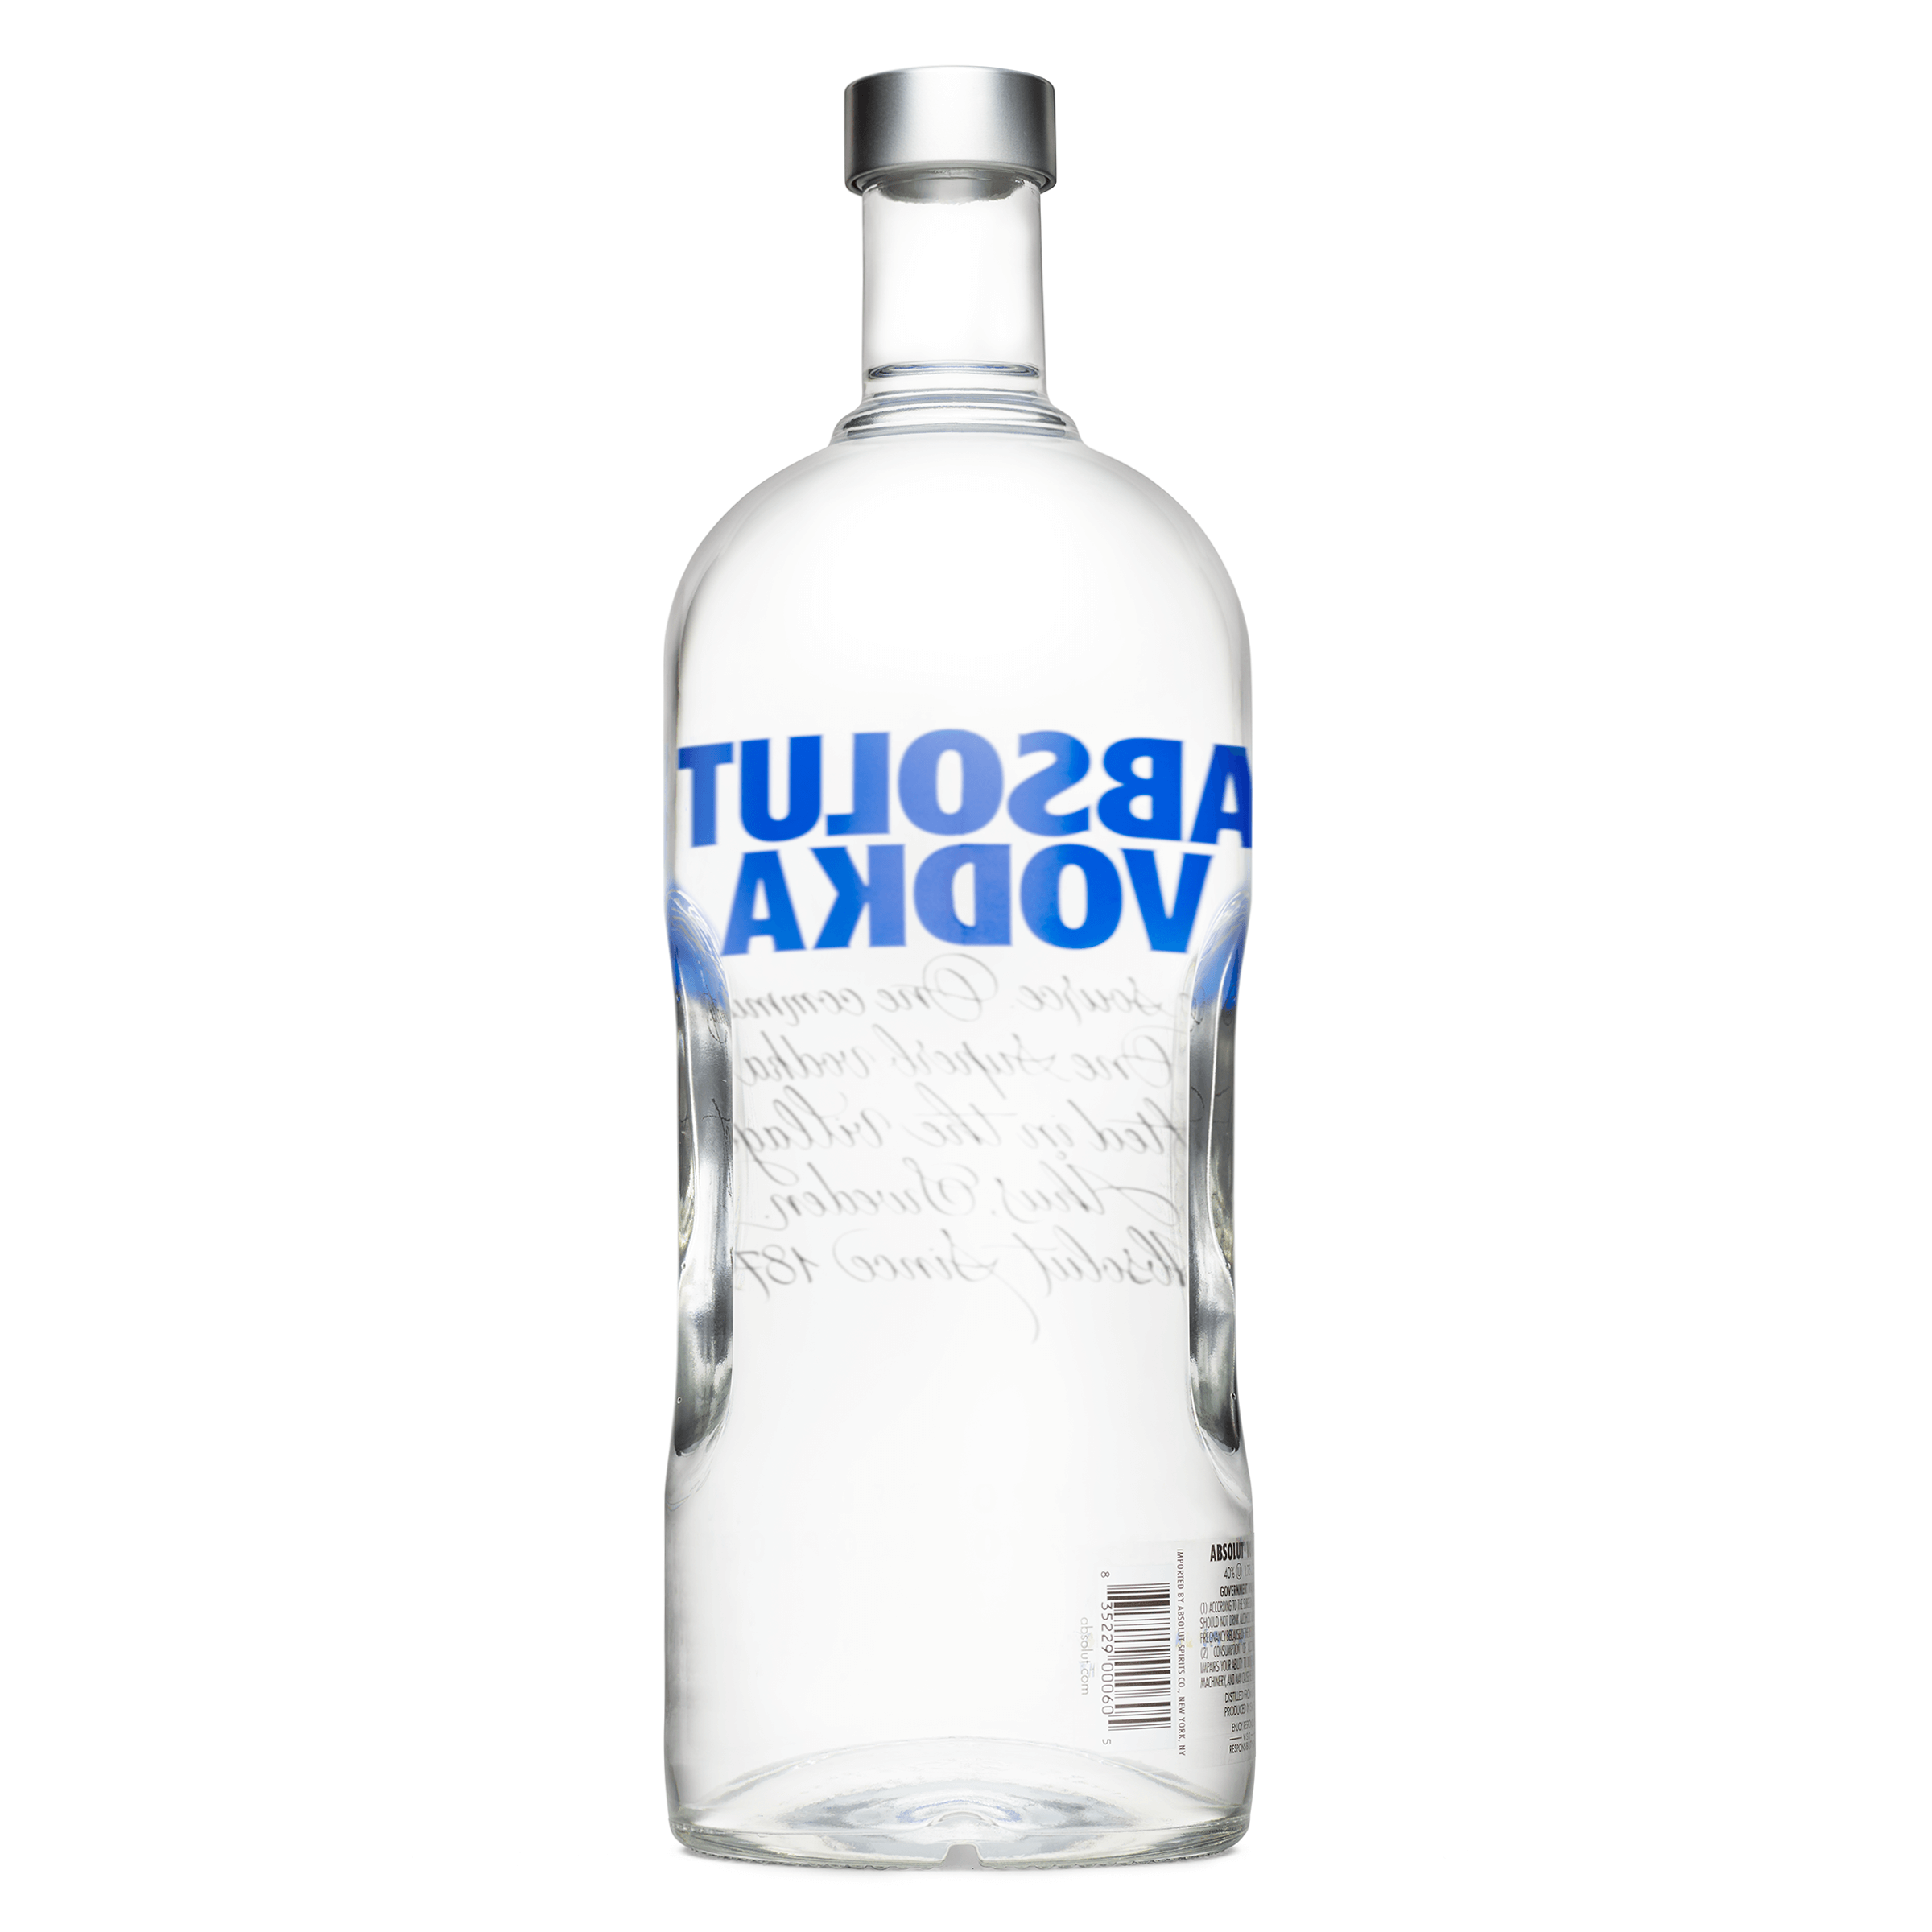 Is Absolut Vodka Gluten Free